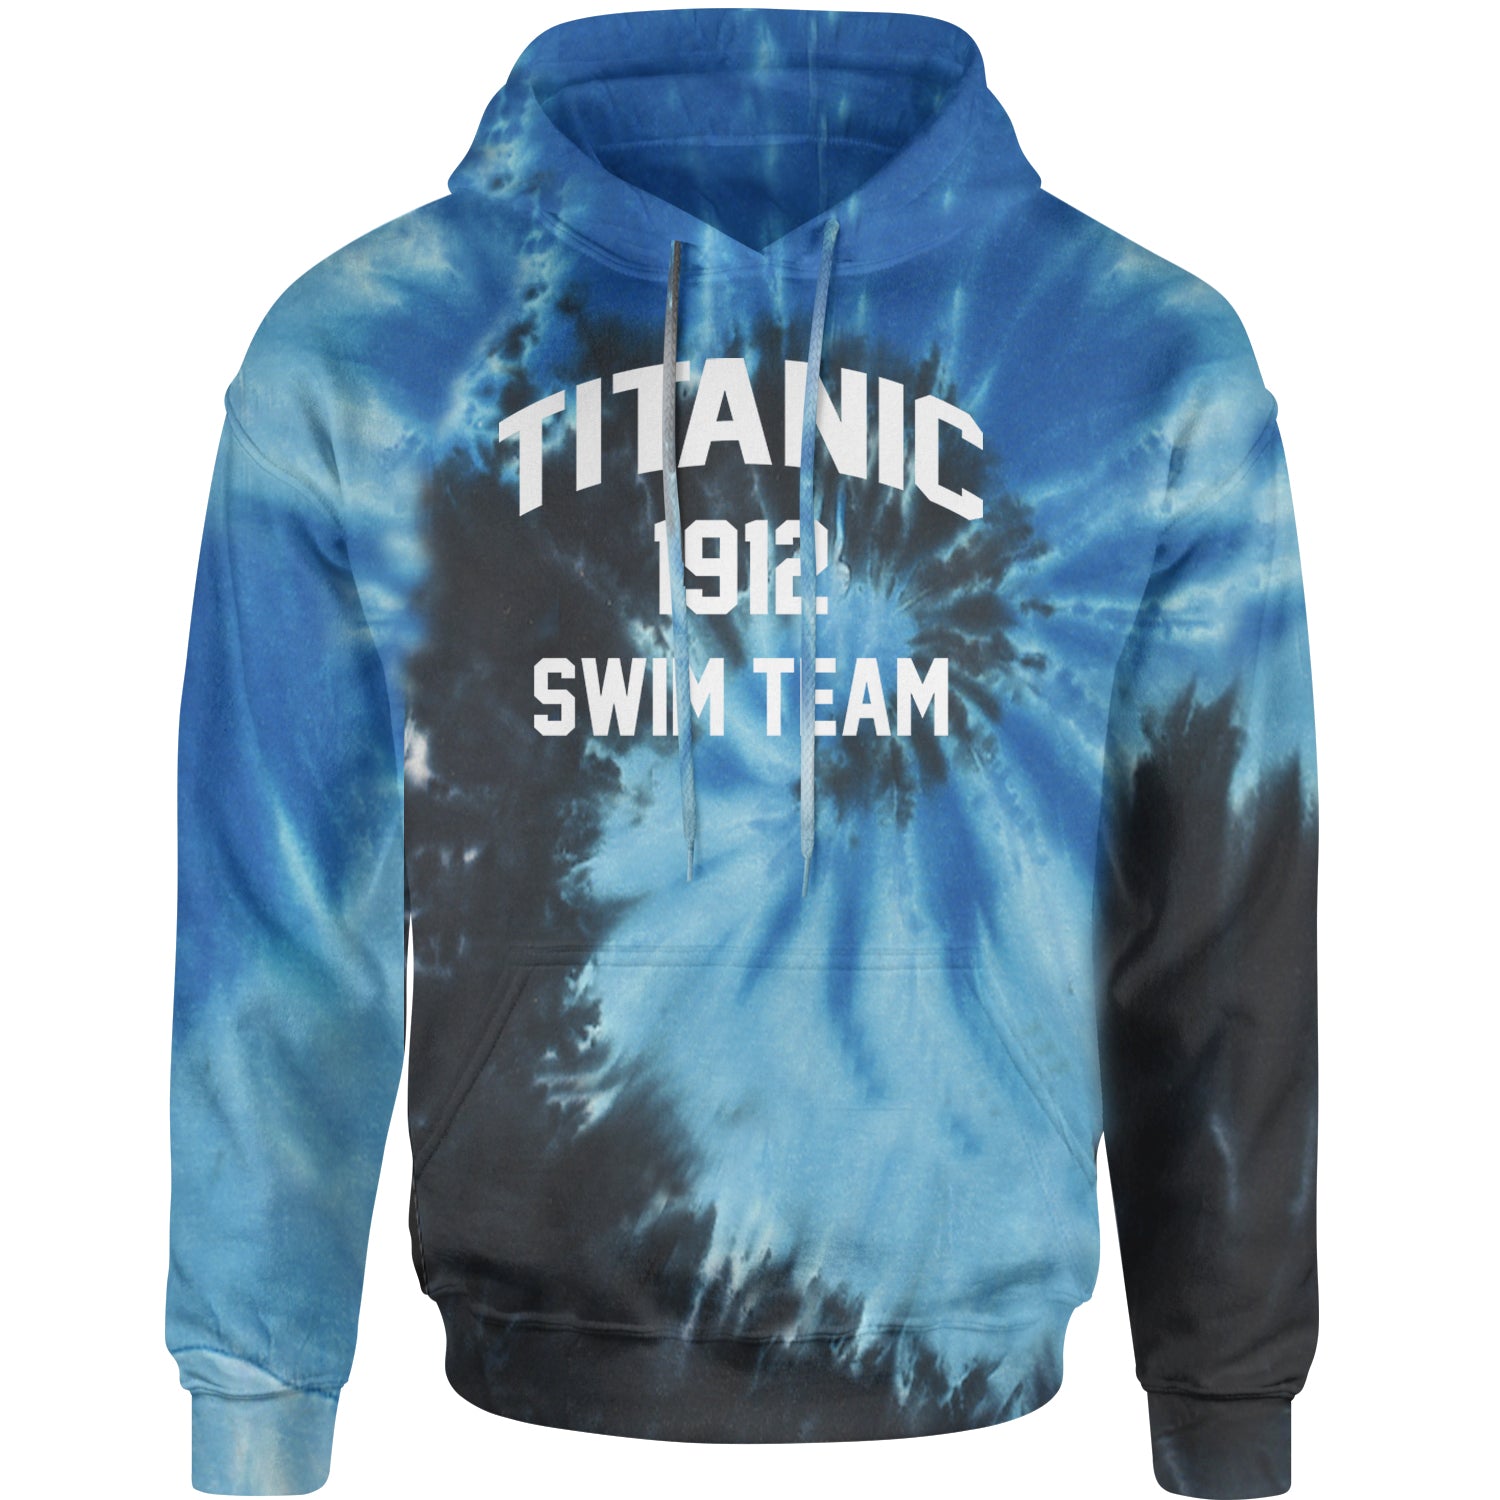 Titanic Swim Team 1912 Funny Cruise Adult Hoodie Sweatshirt